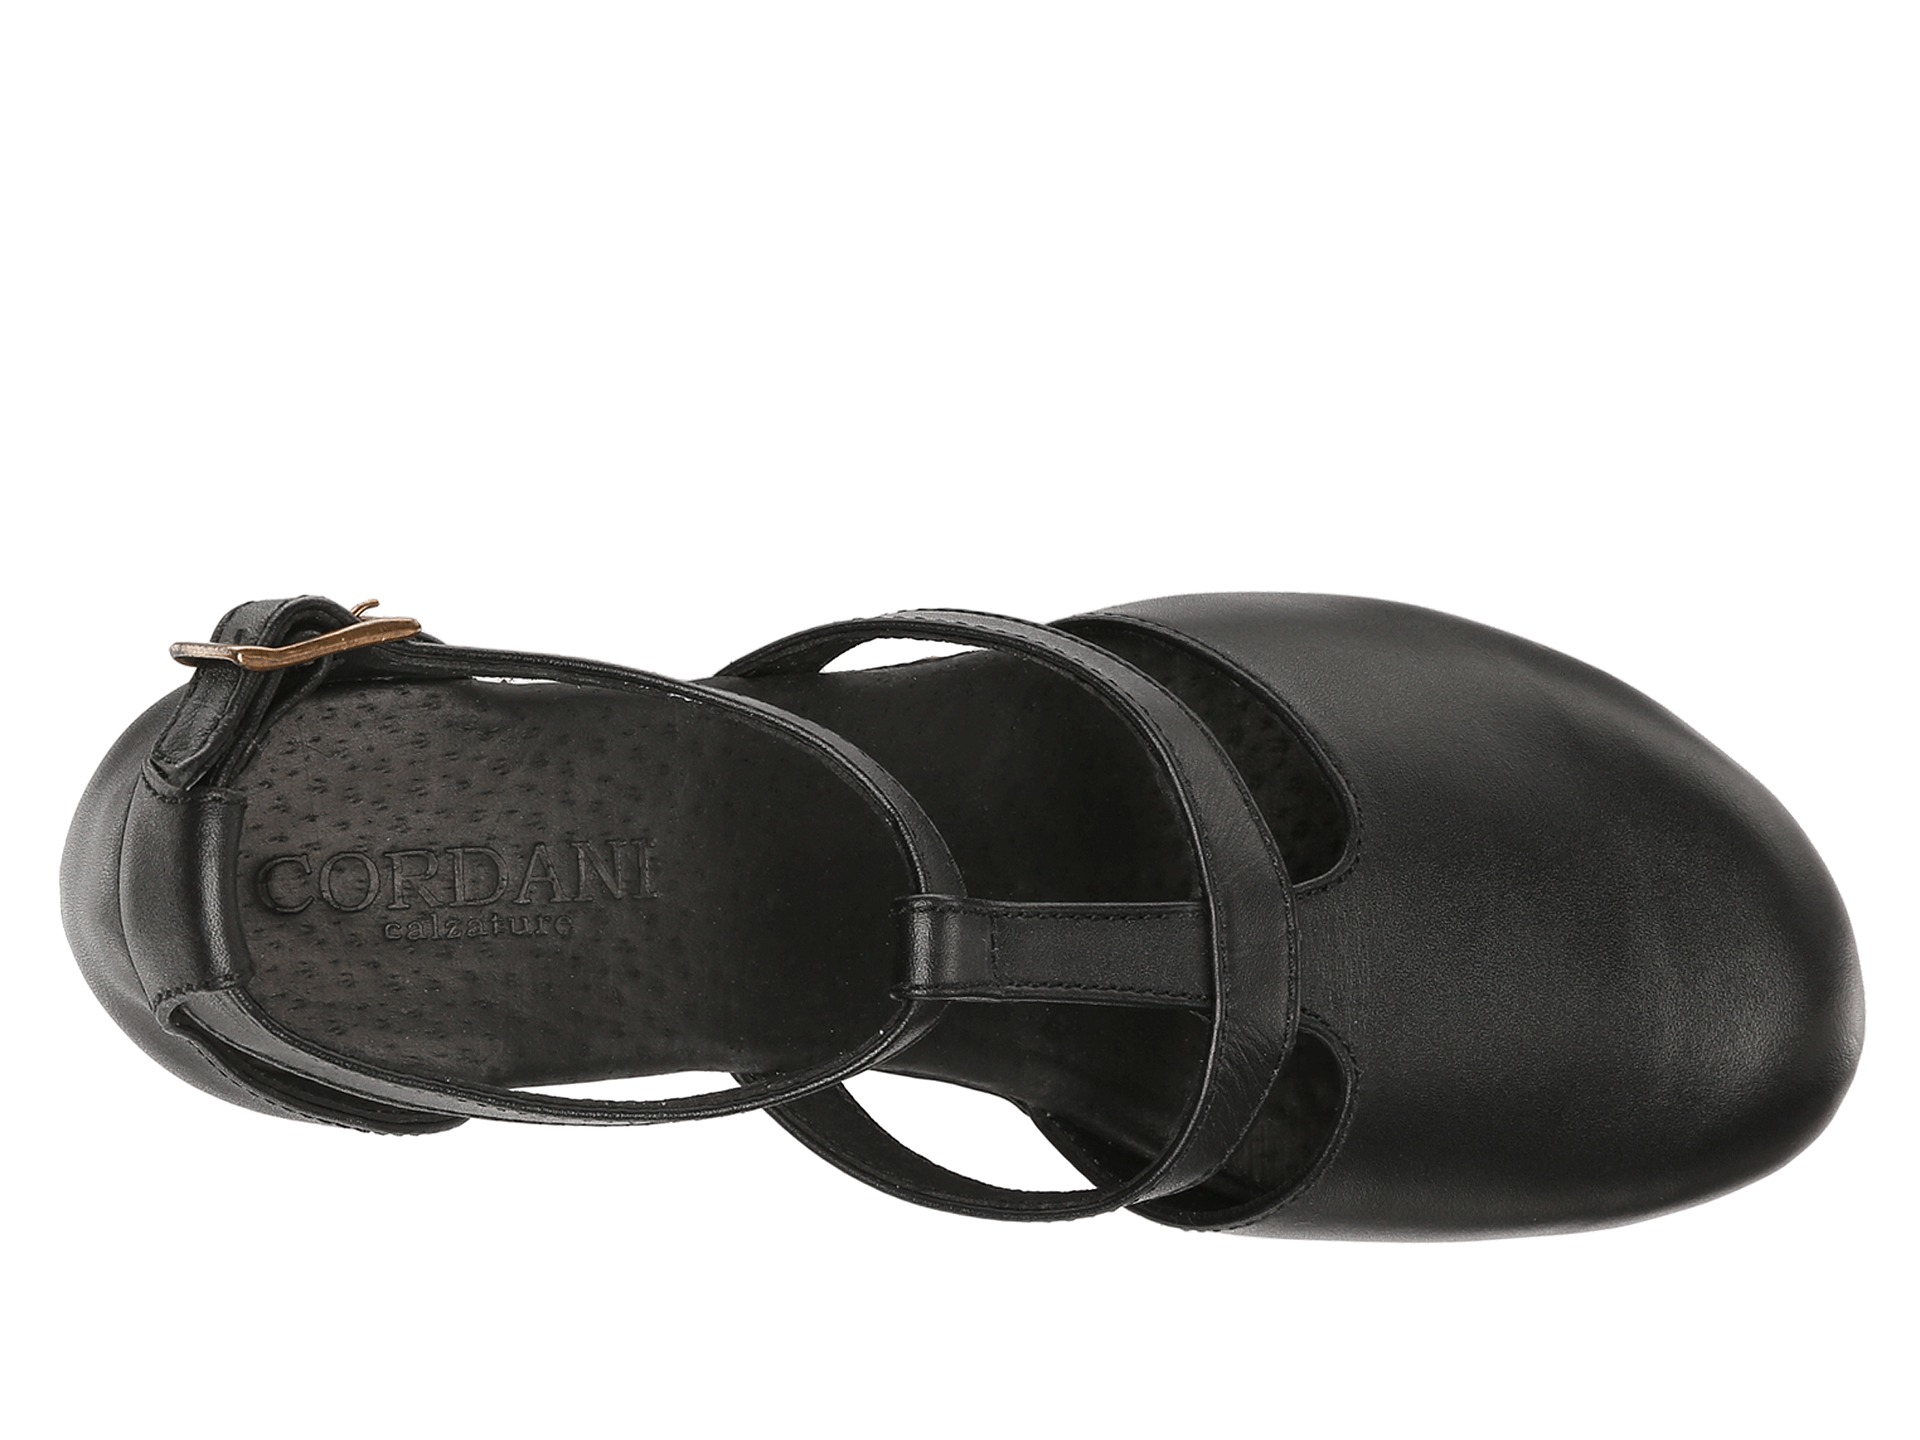 Cordani Leather Zoran in Black Leather (Black) - Lyst